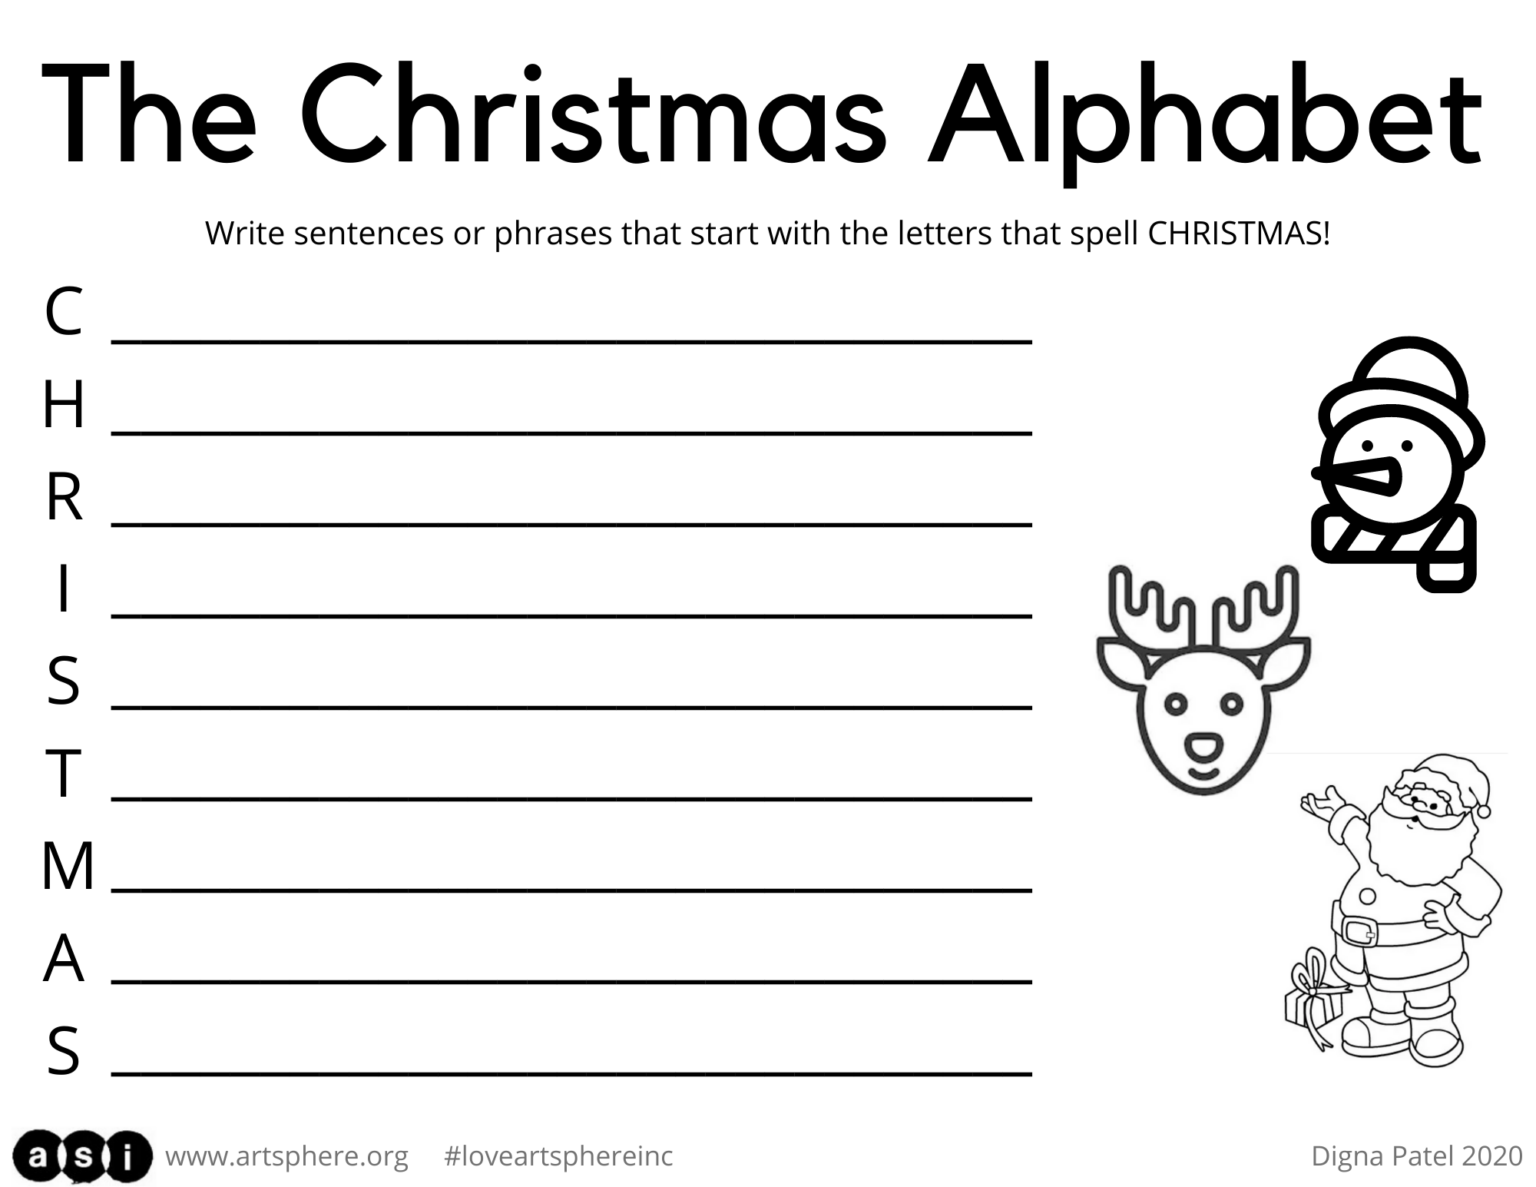 the-christmas-alphabet-handout-art-sphere-inc